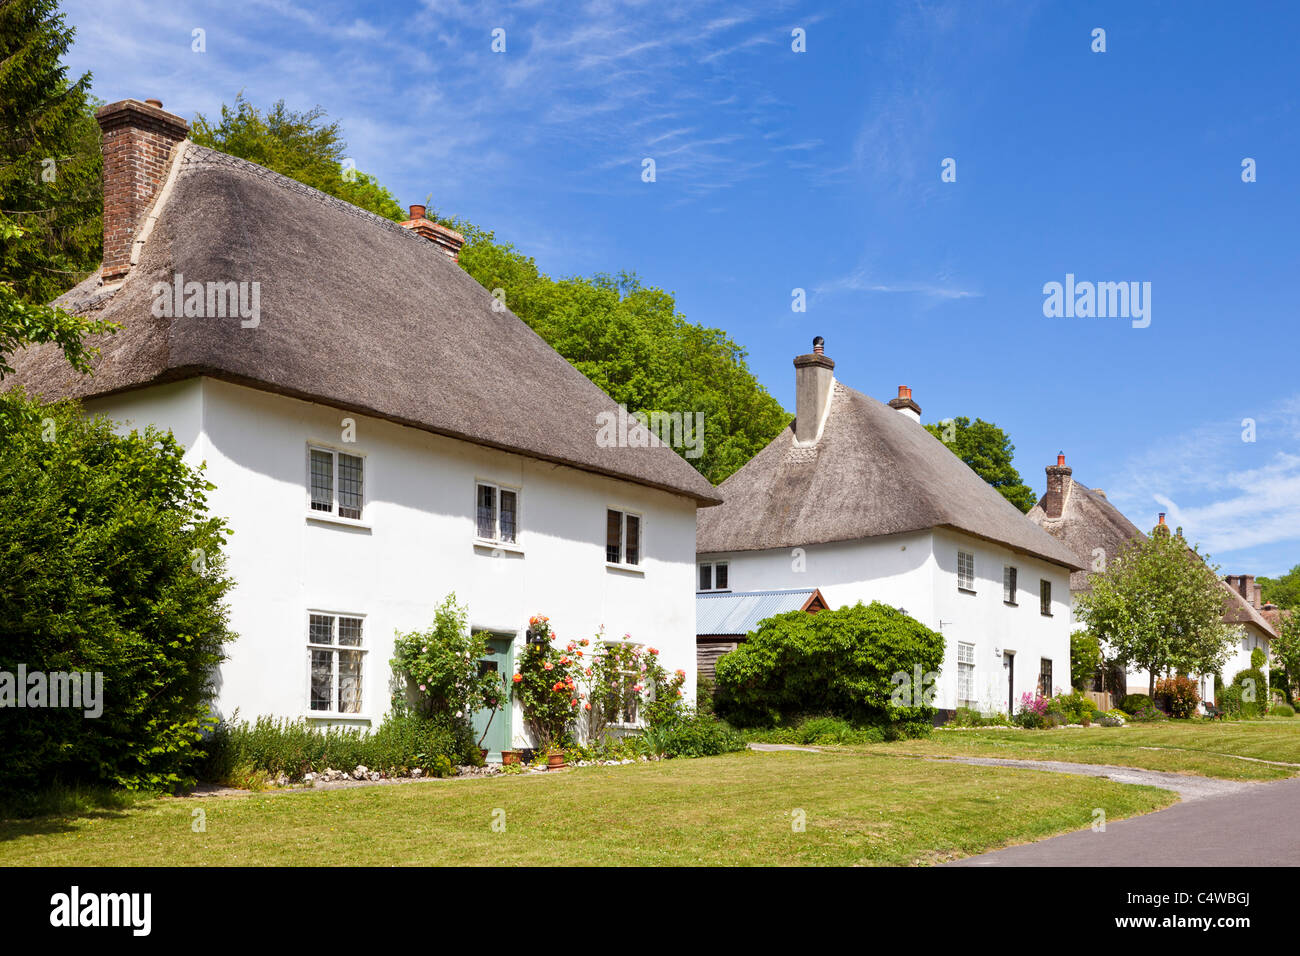 Hilera de casas unifamiliares tradicionales con techo de paja, Milton Abbas, Dorset, Inglaterra, Reino Unido. Foto de stock